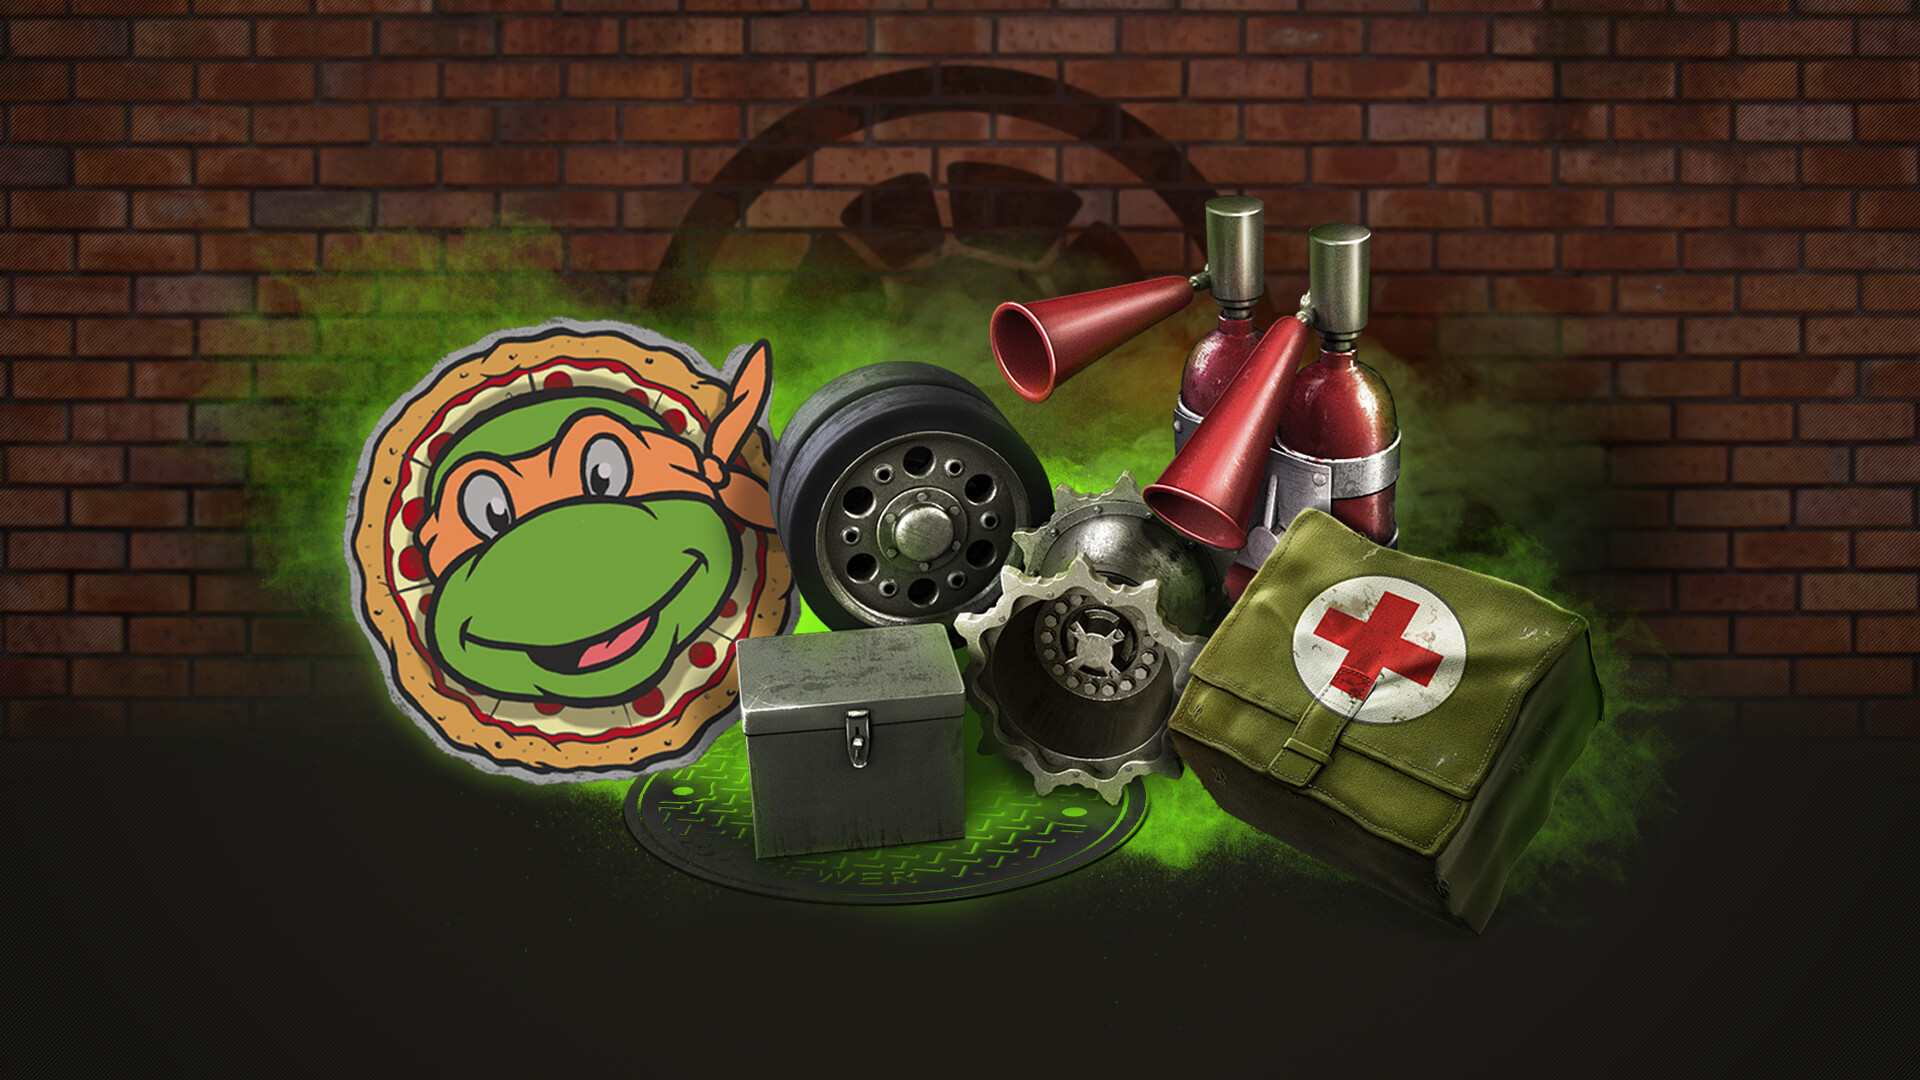 World of Tanks — Turtles Support Kit DLC Featured Screenshot #1